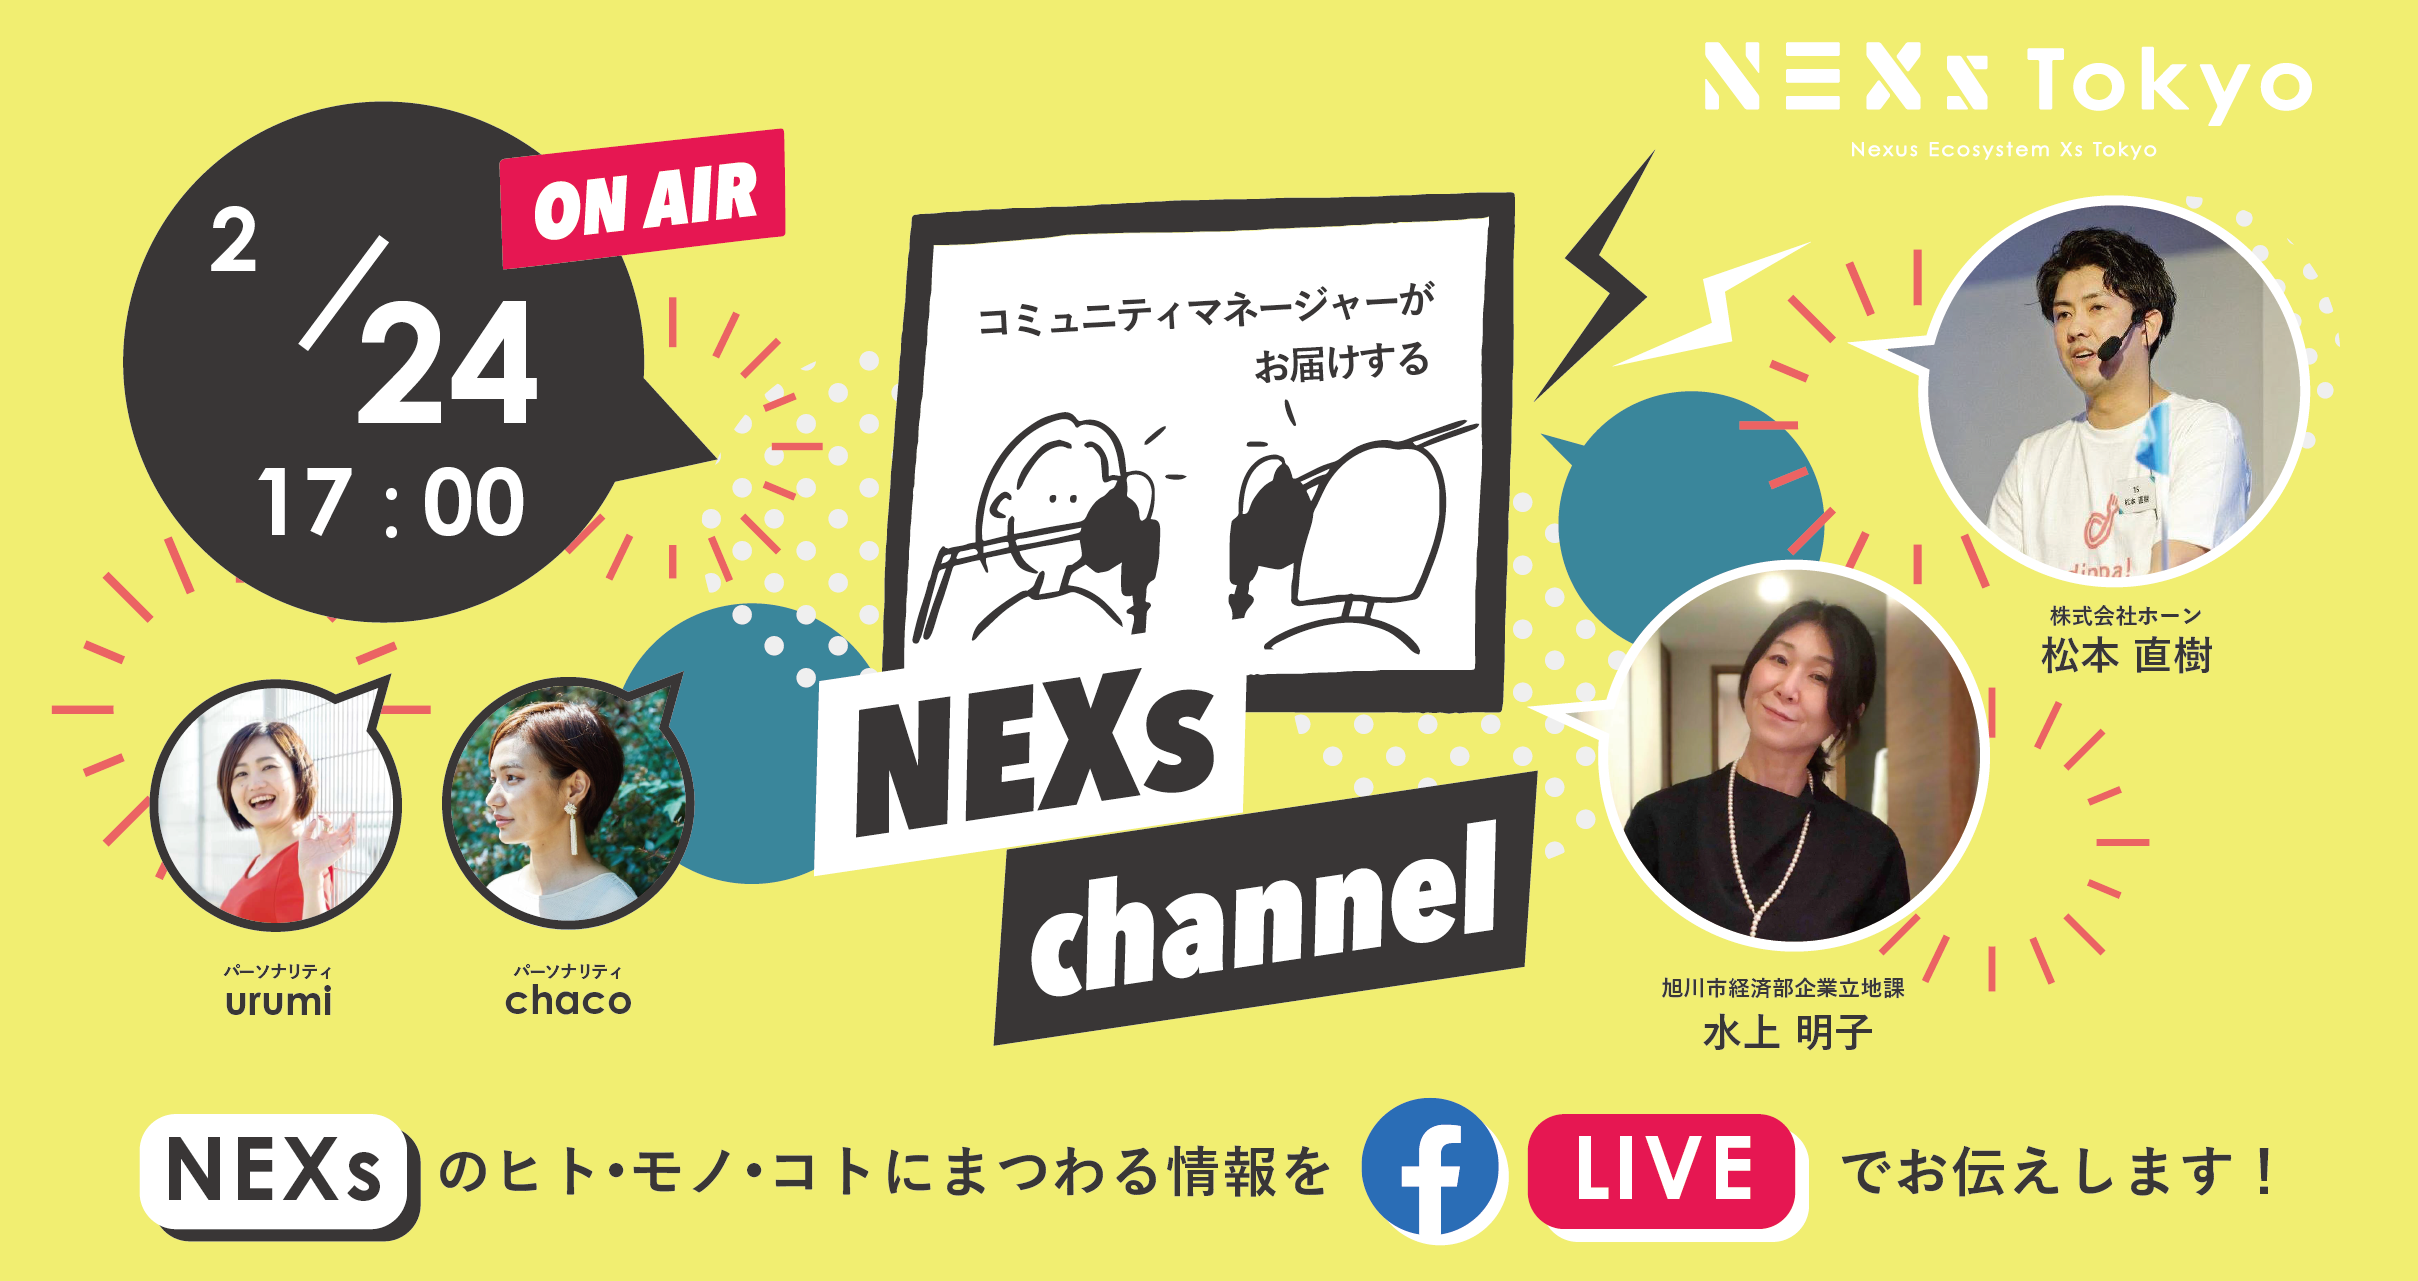 NEXs channel #14 -NEXs Tokyoのヒト・モノ・コトを特設ラジオブースから生放送でお届け！-